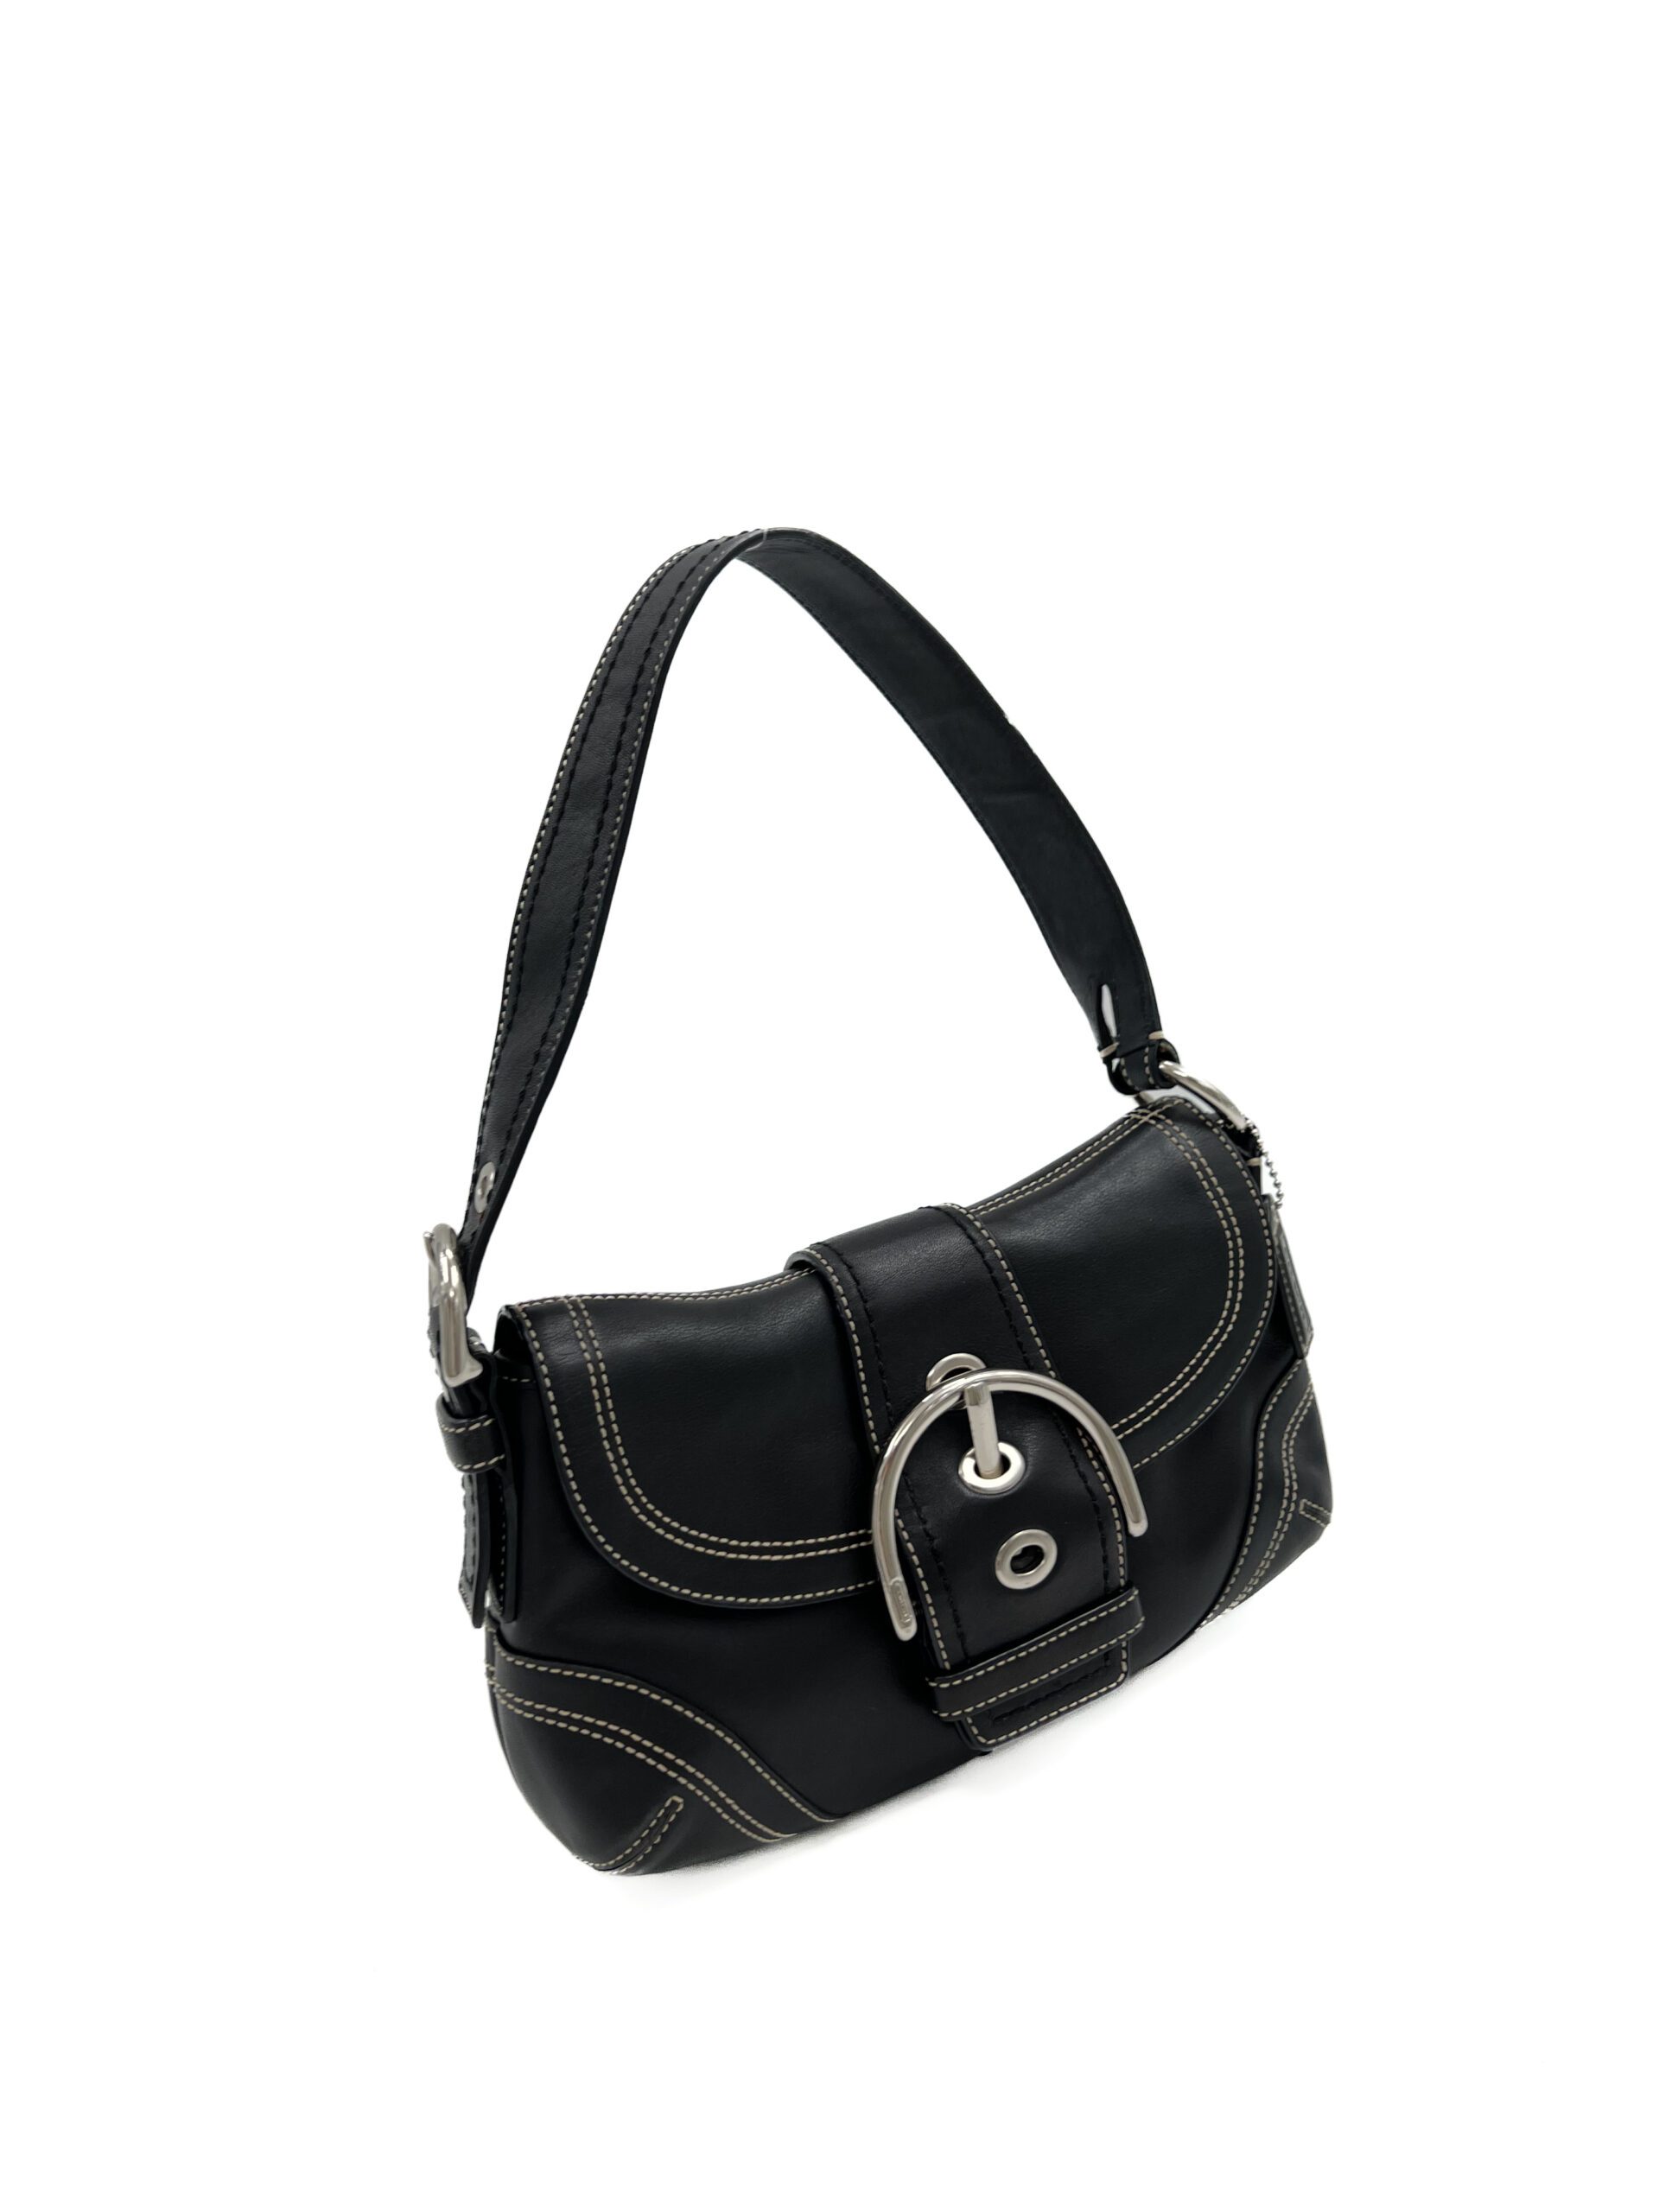 Coach Black Leather Mini Hobo Bag Purse Small Shoulder Bag Genuine |  Stephen Franks